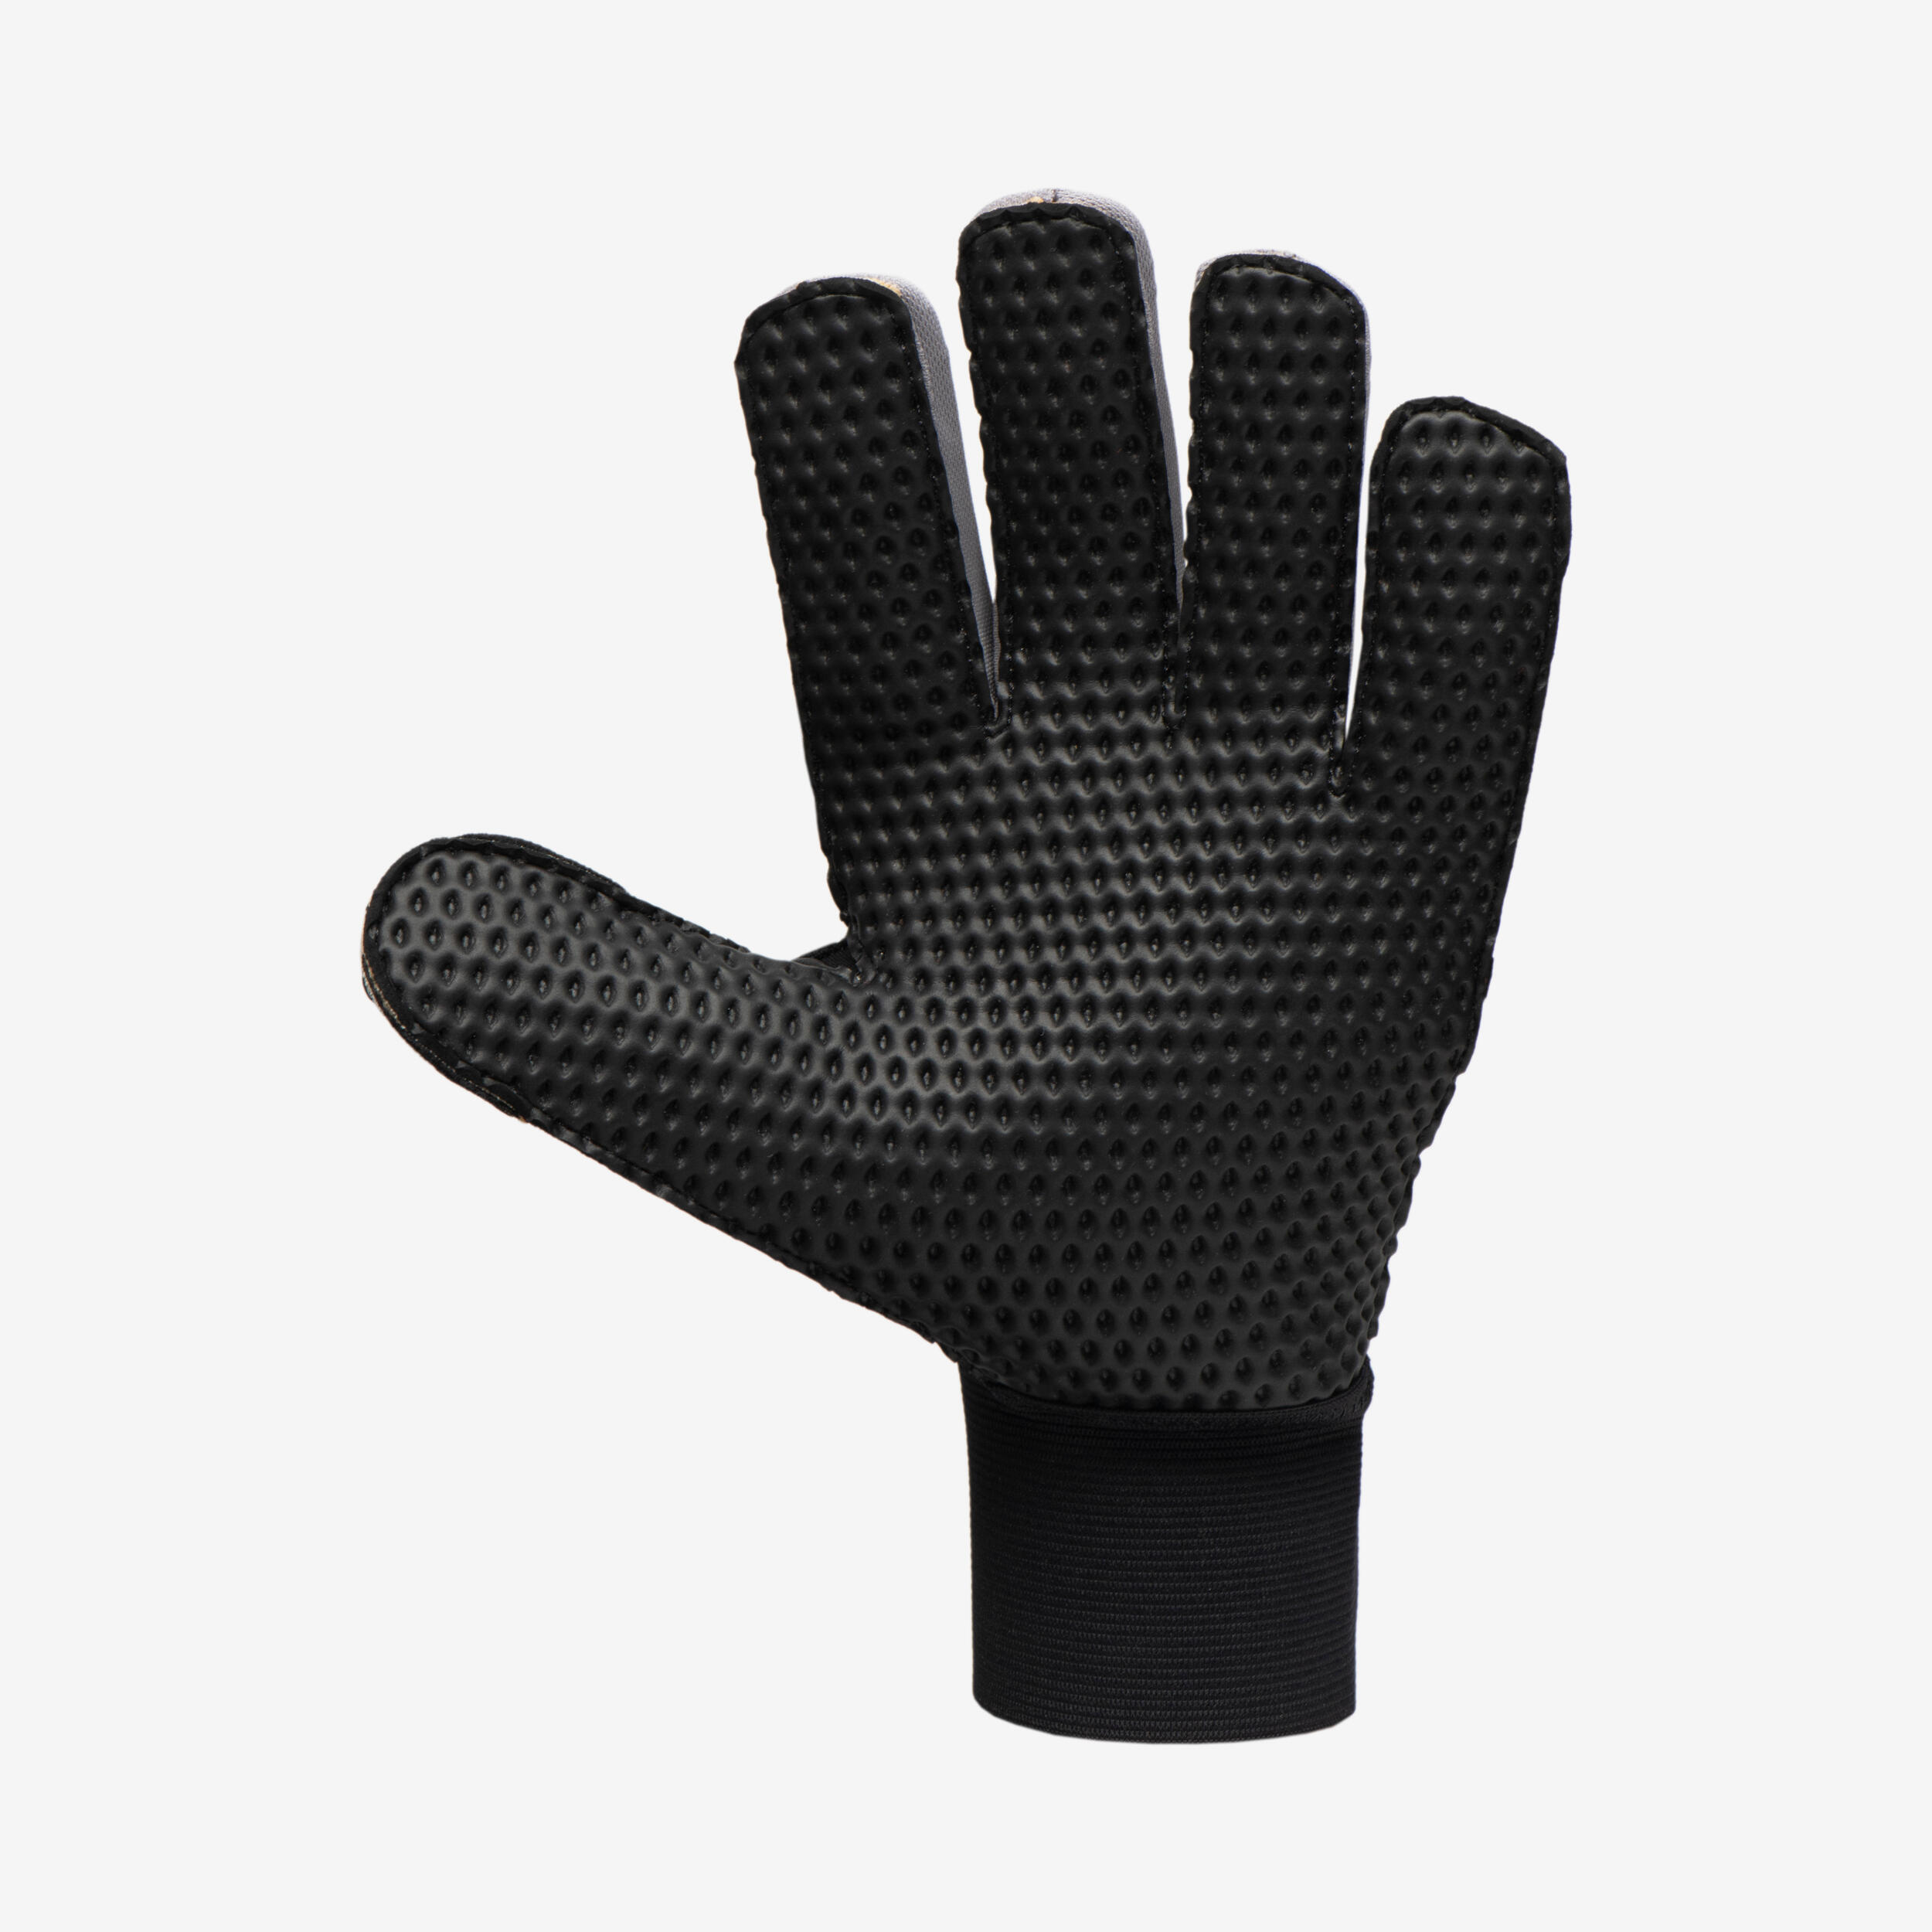 Adult Football Goalkeeper Gloves F100 Superresist - Black/Grey 4/7